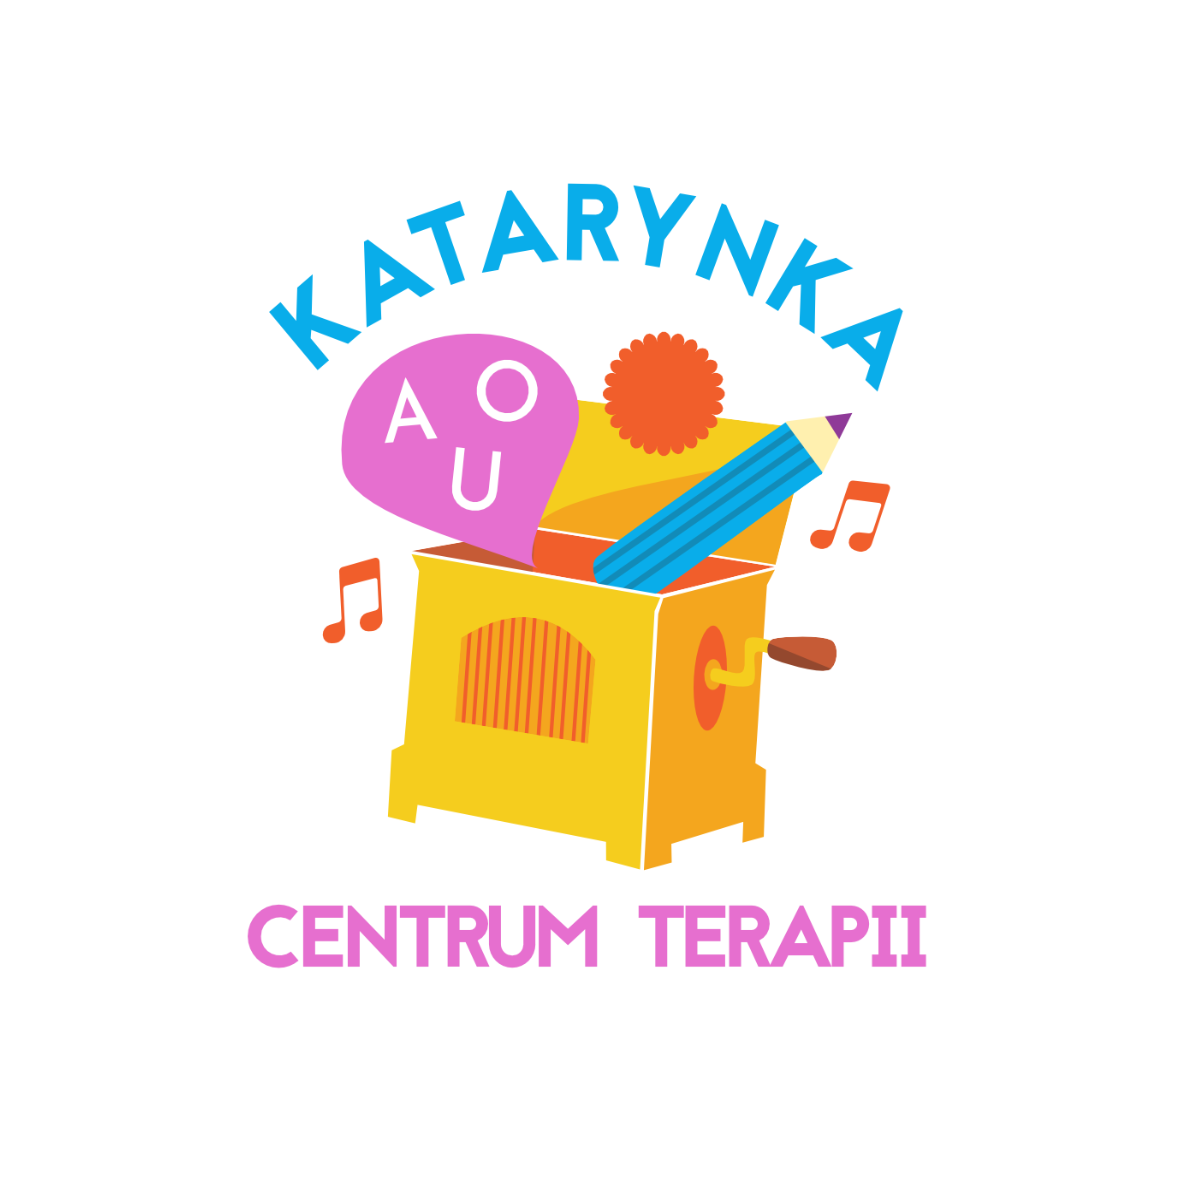 Katarynka Centrum Terapii - logo